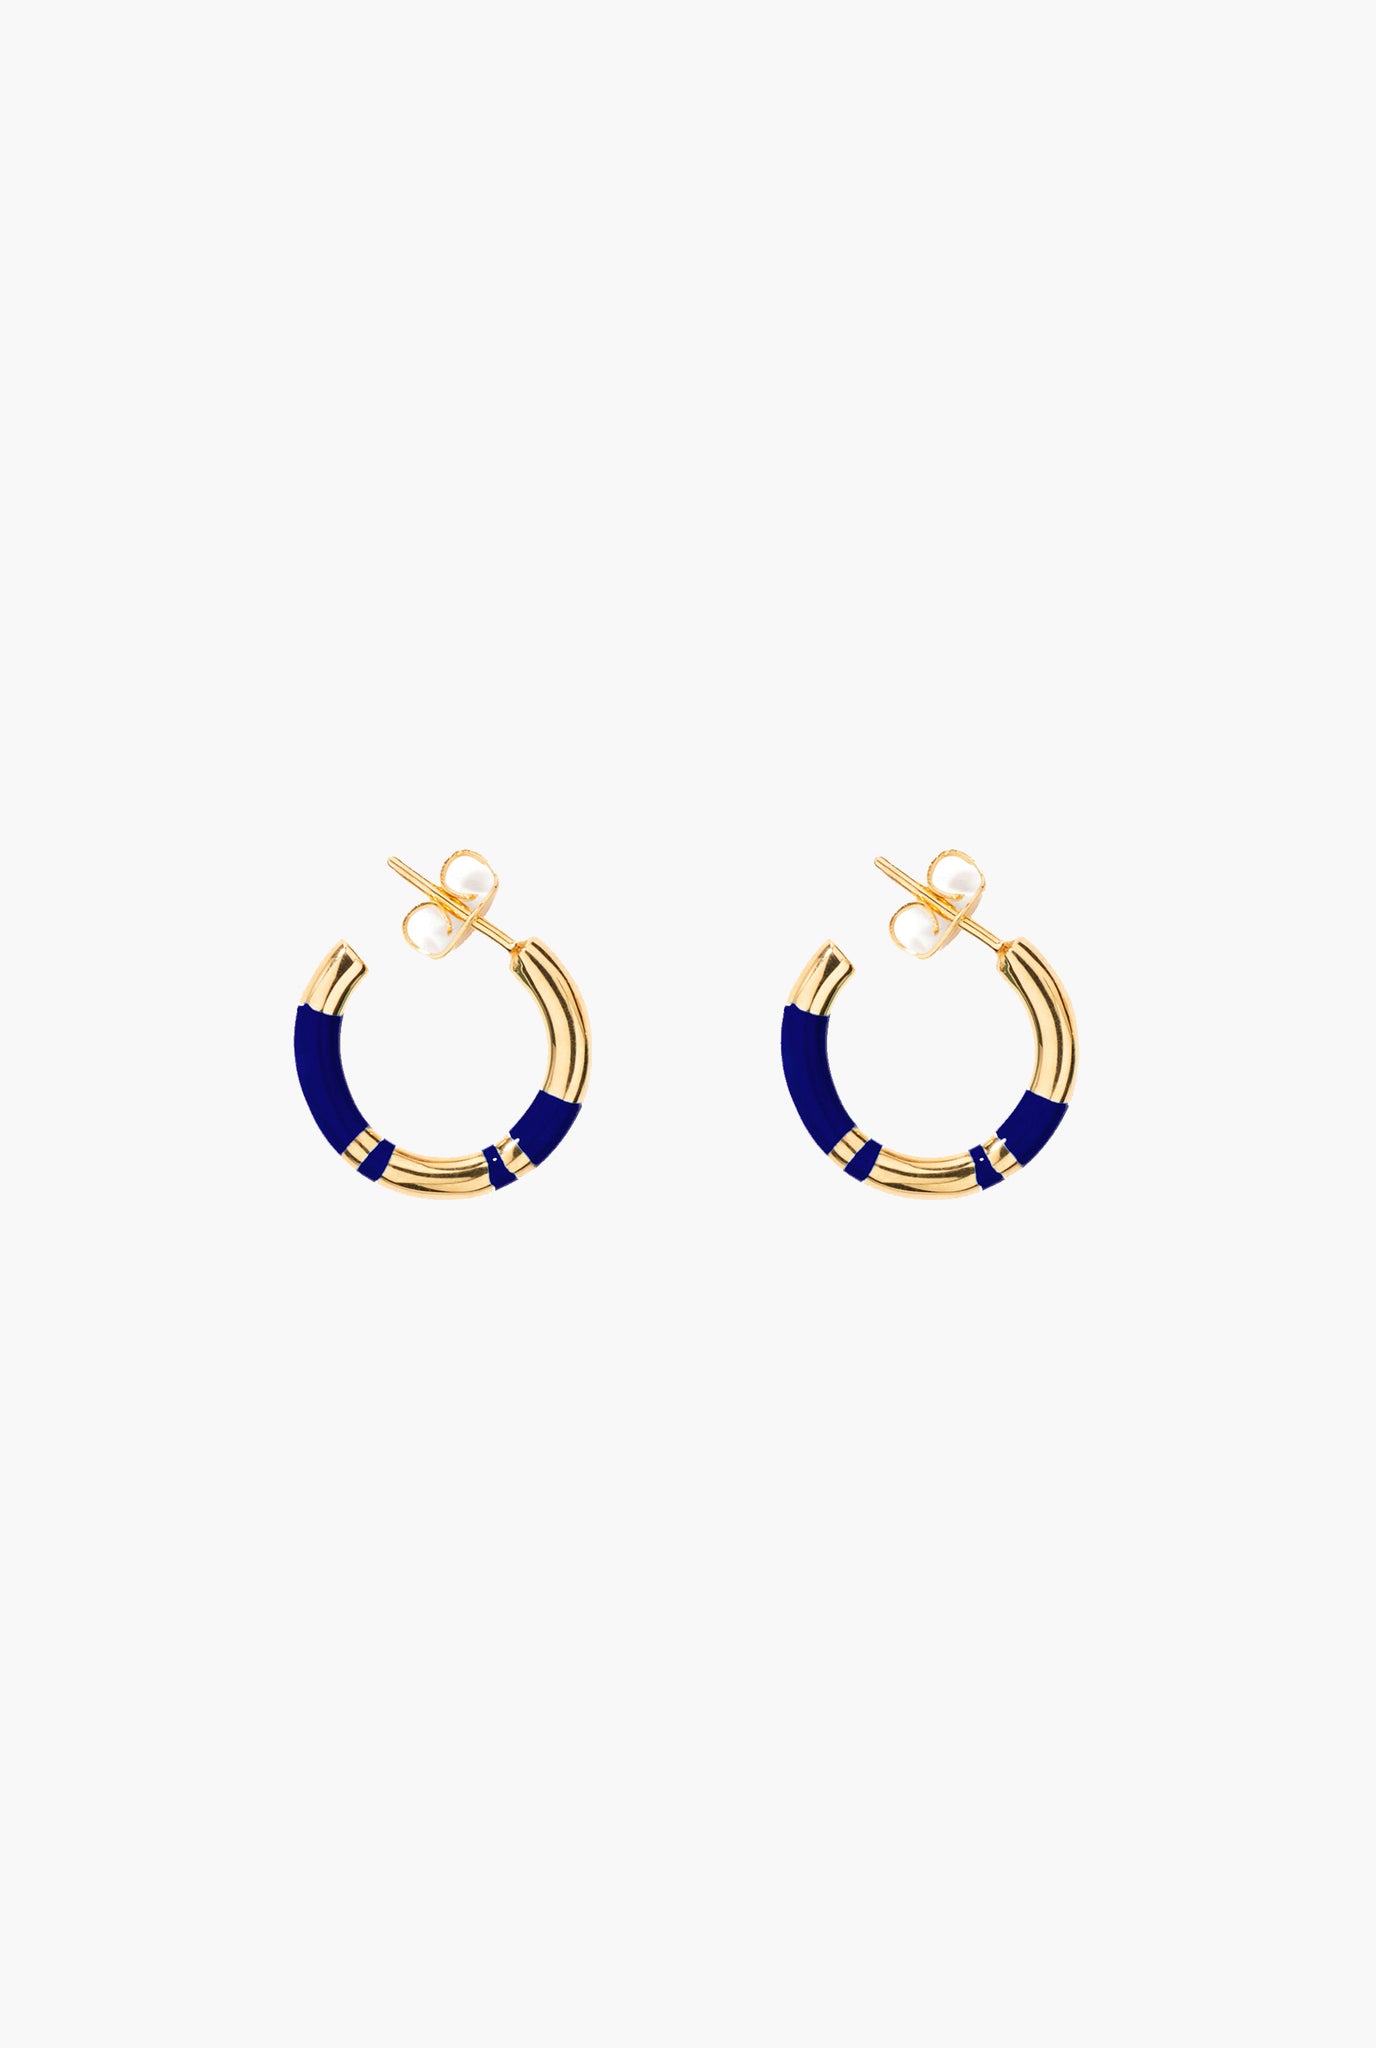 Positano mini hoop earrings, blue lapis